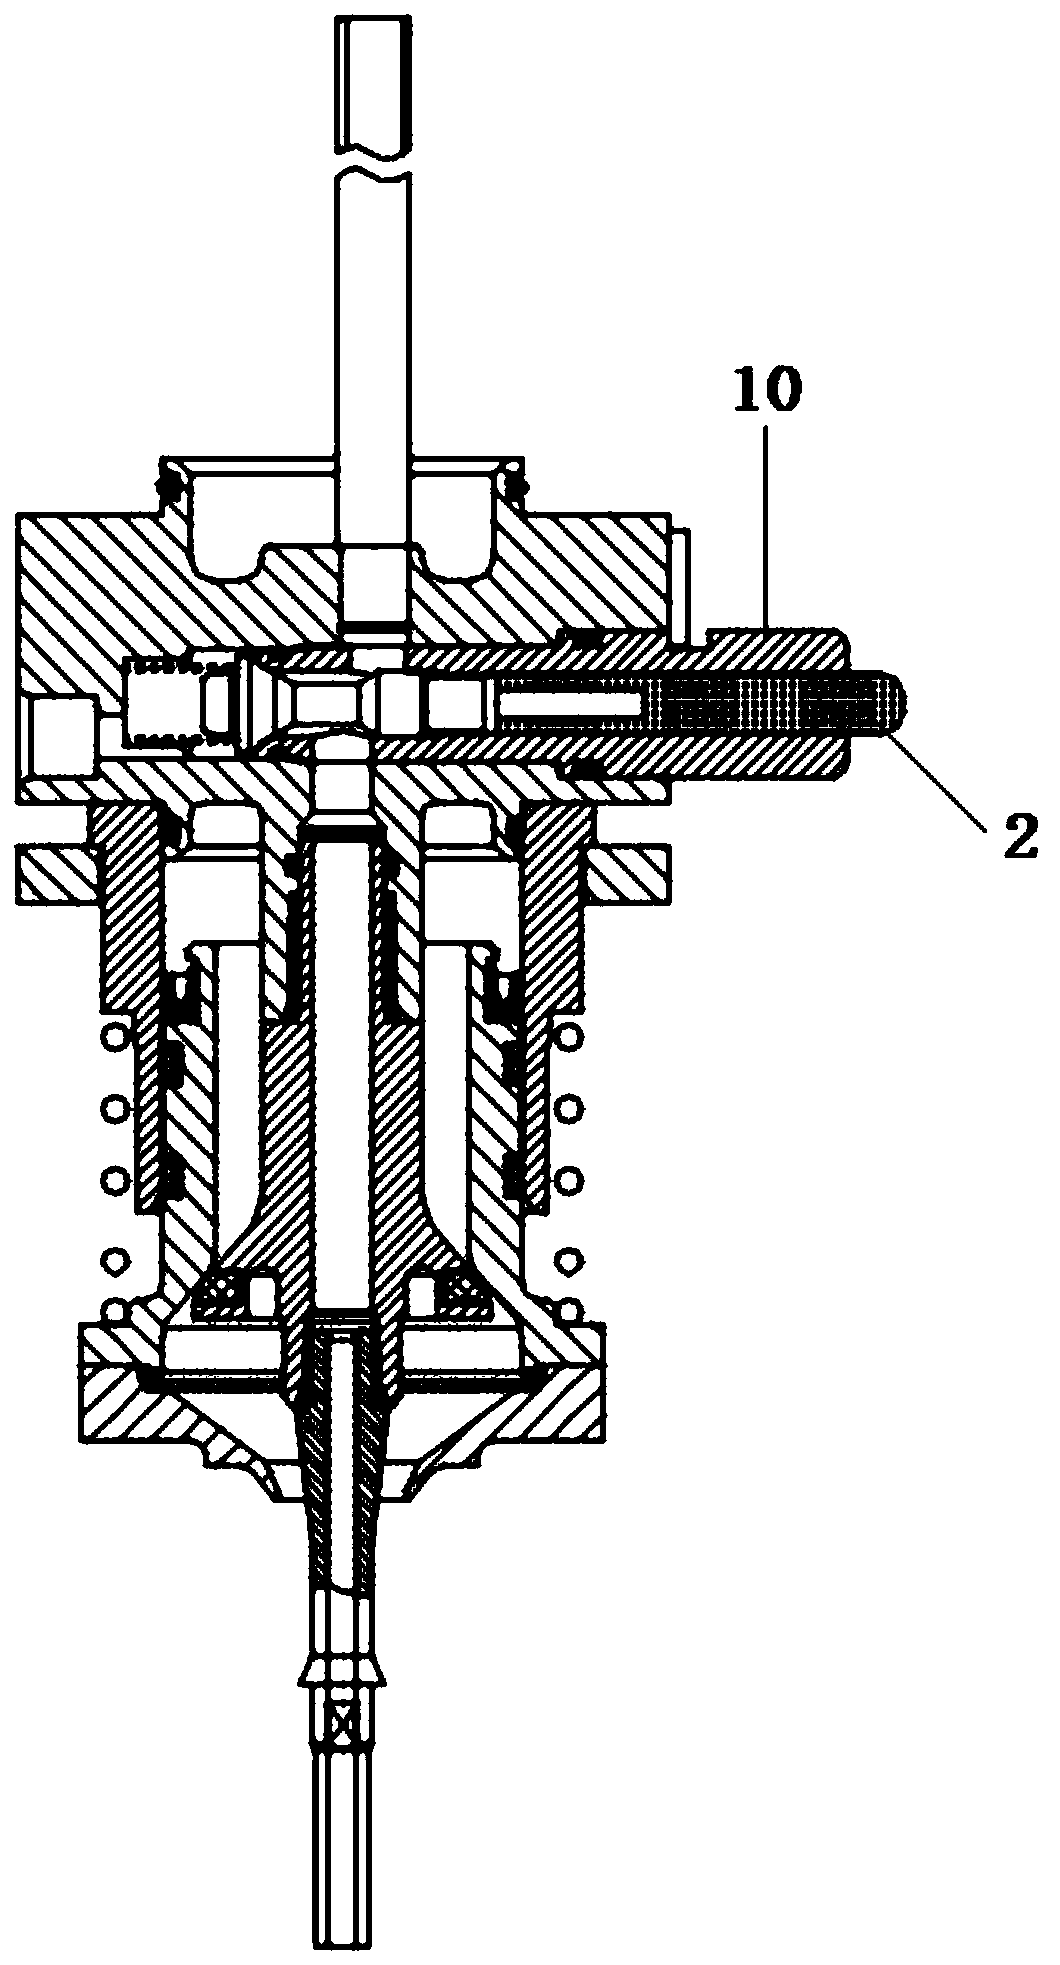 Guide ceramic valve rod for filling valve and filling valve with same